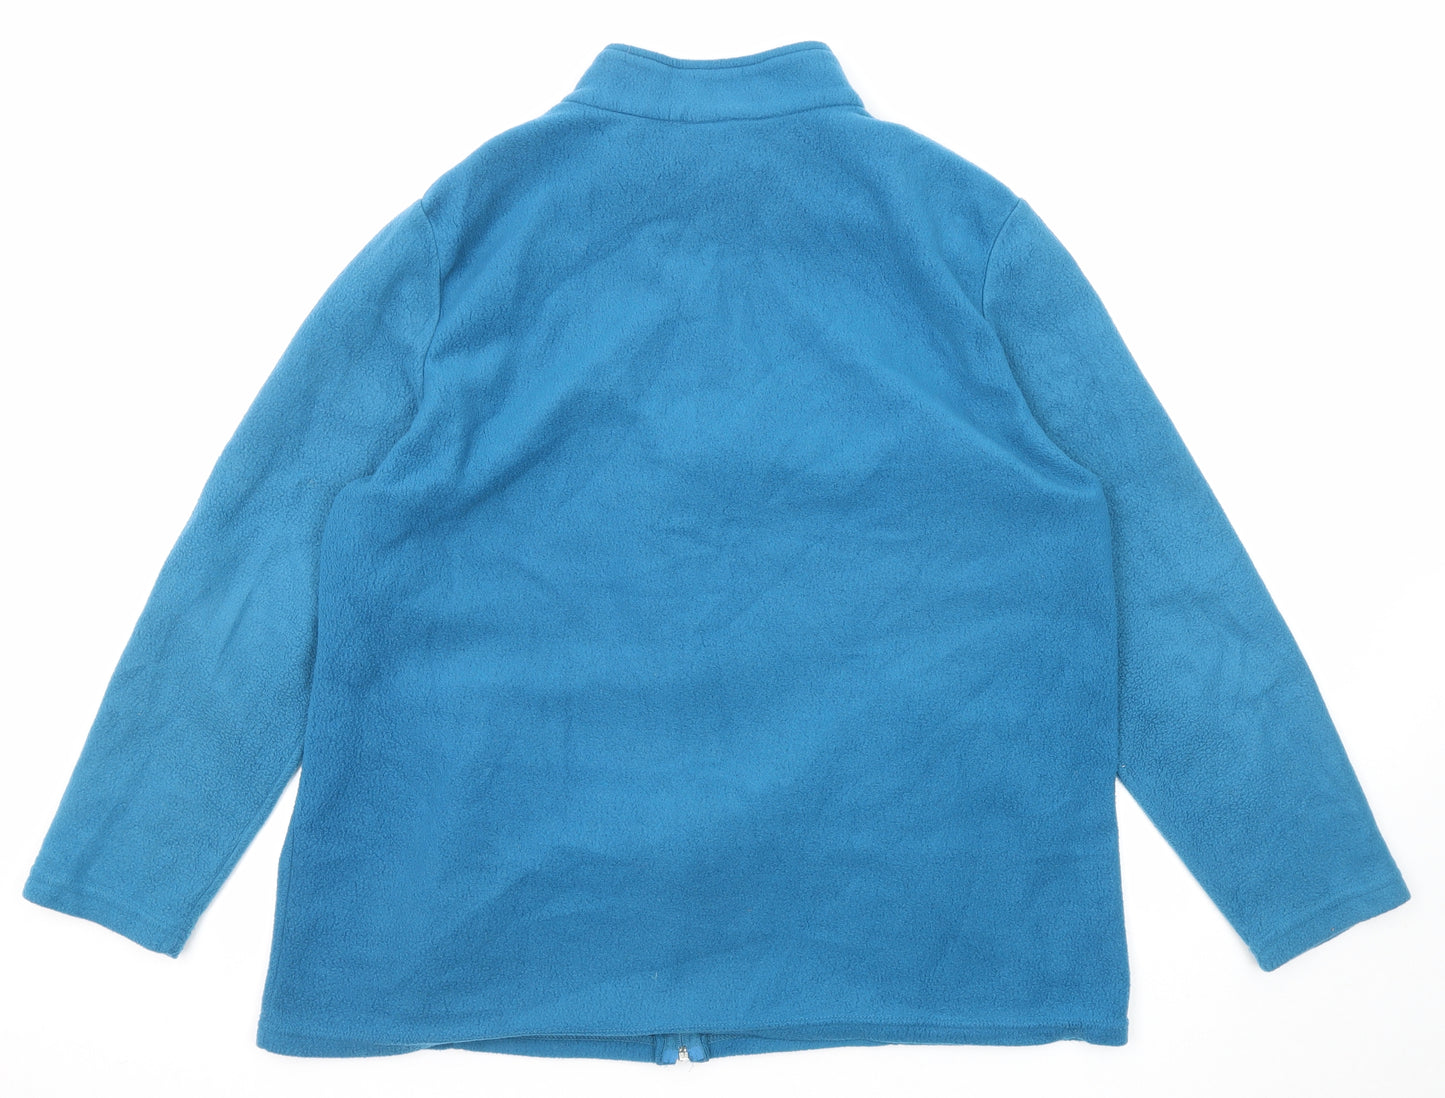 Alison Vallee Womens Blue Jacket Size XL Zip